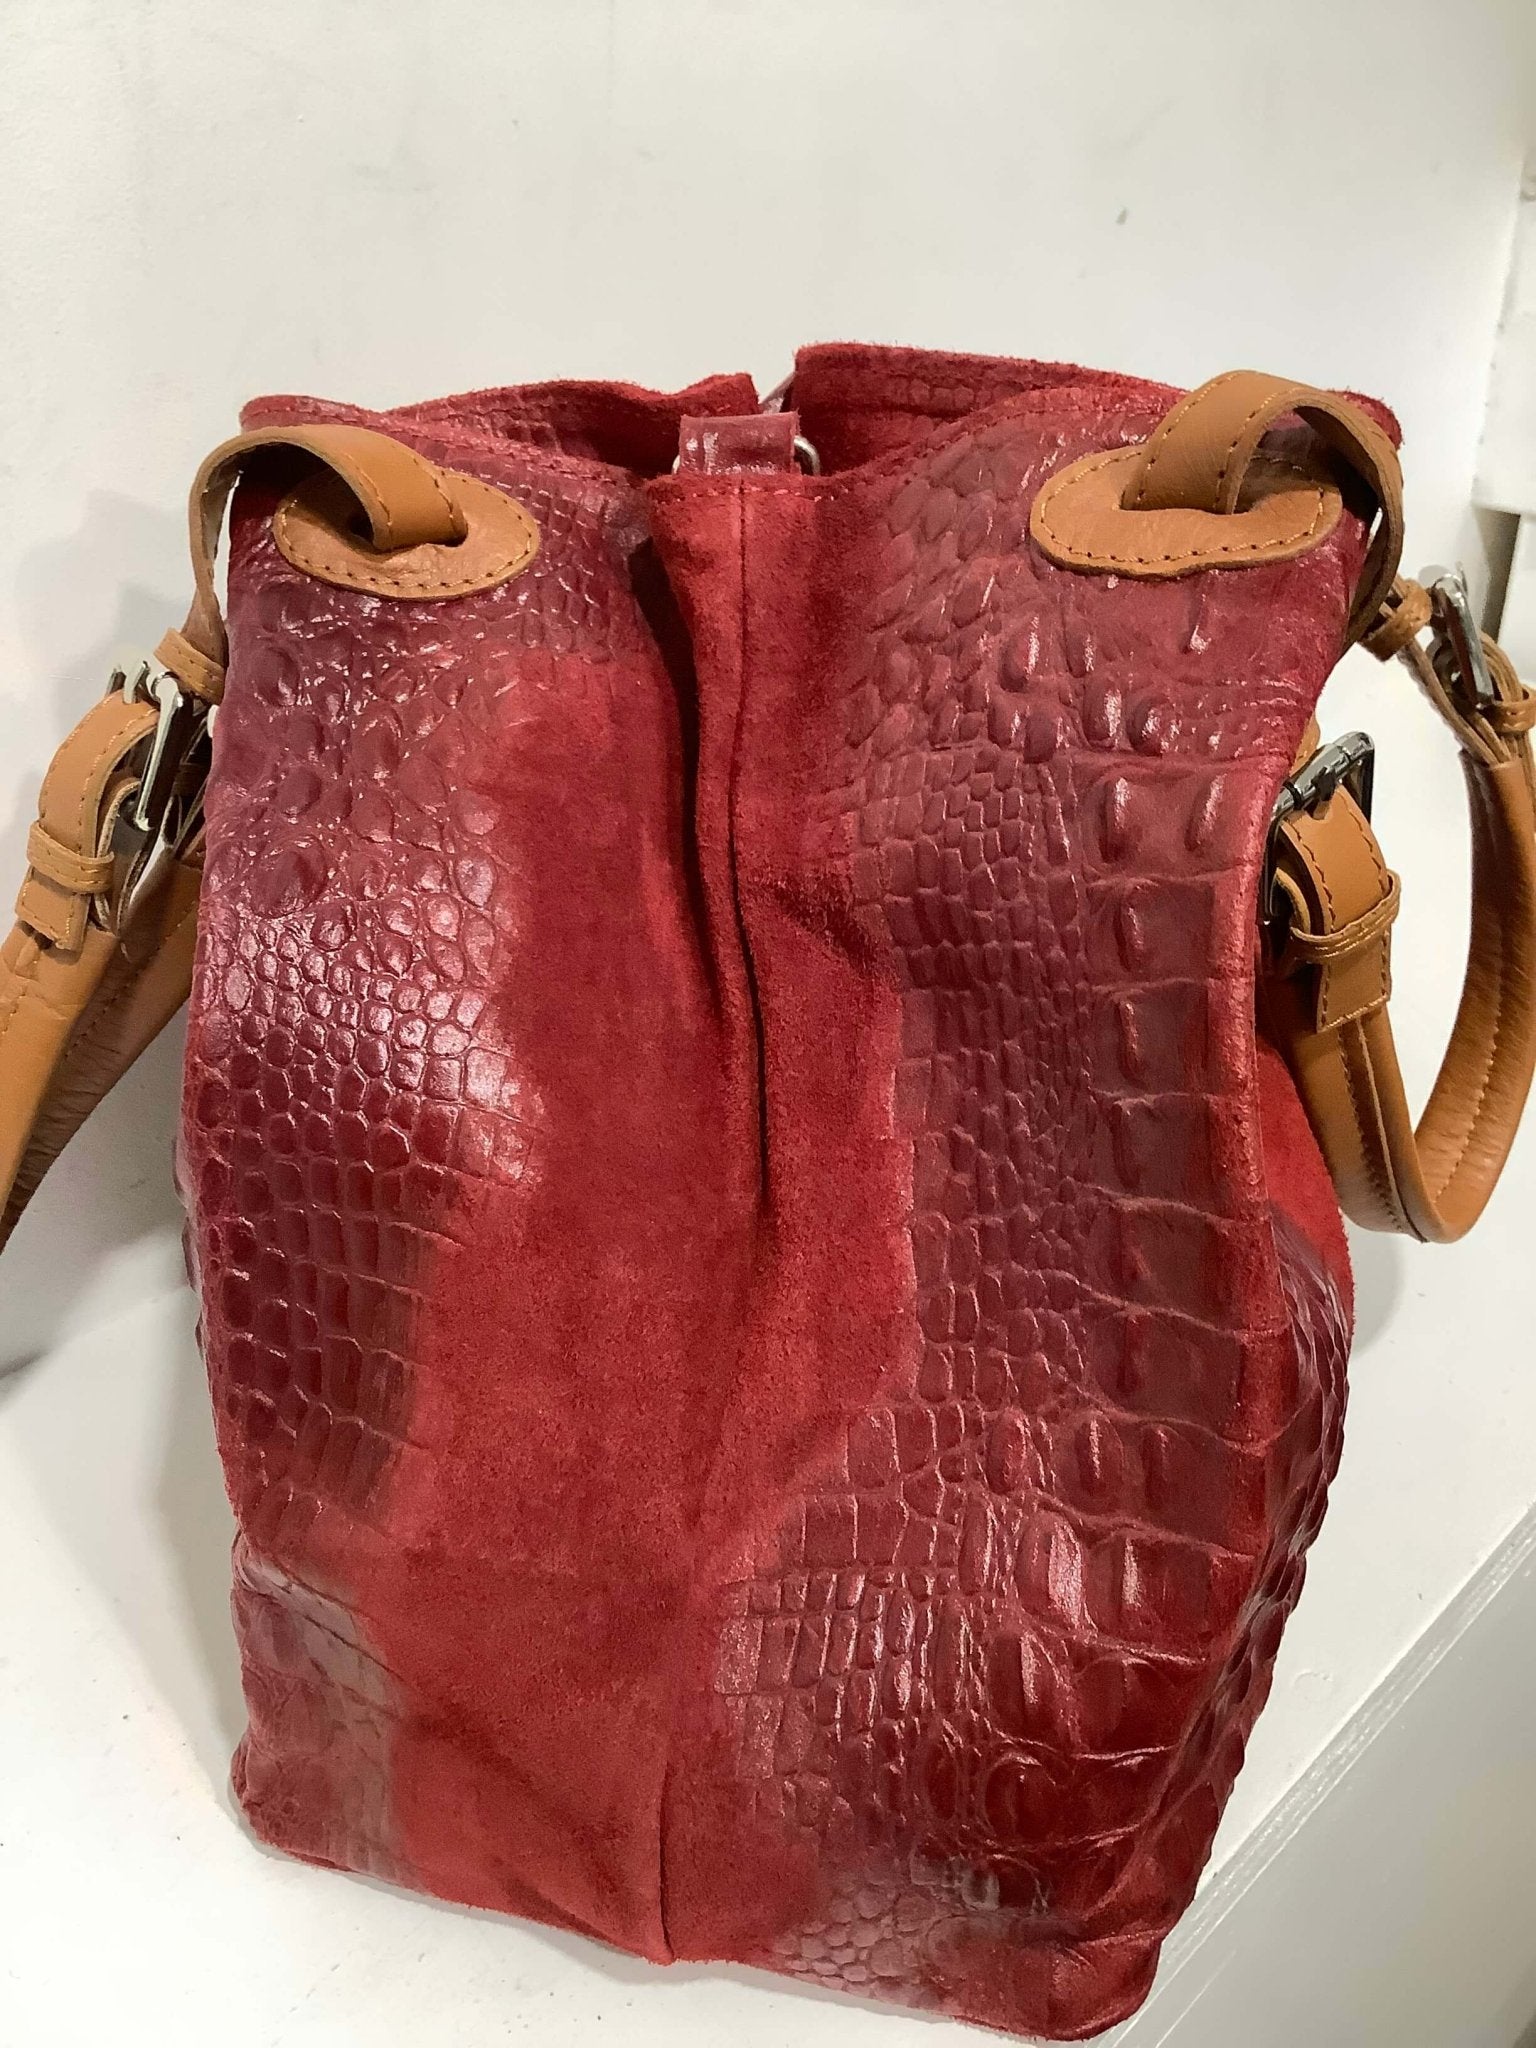 Vintage Stella Red Bag - Bitter and Better